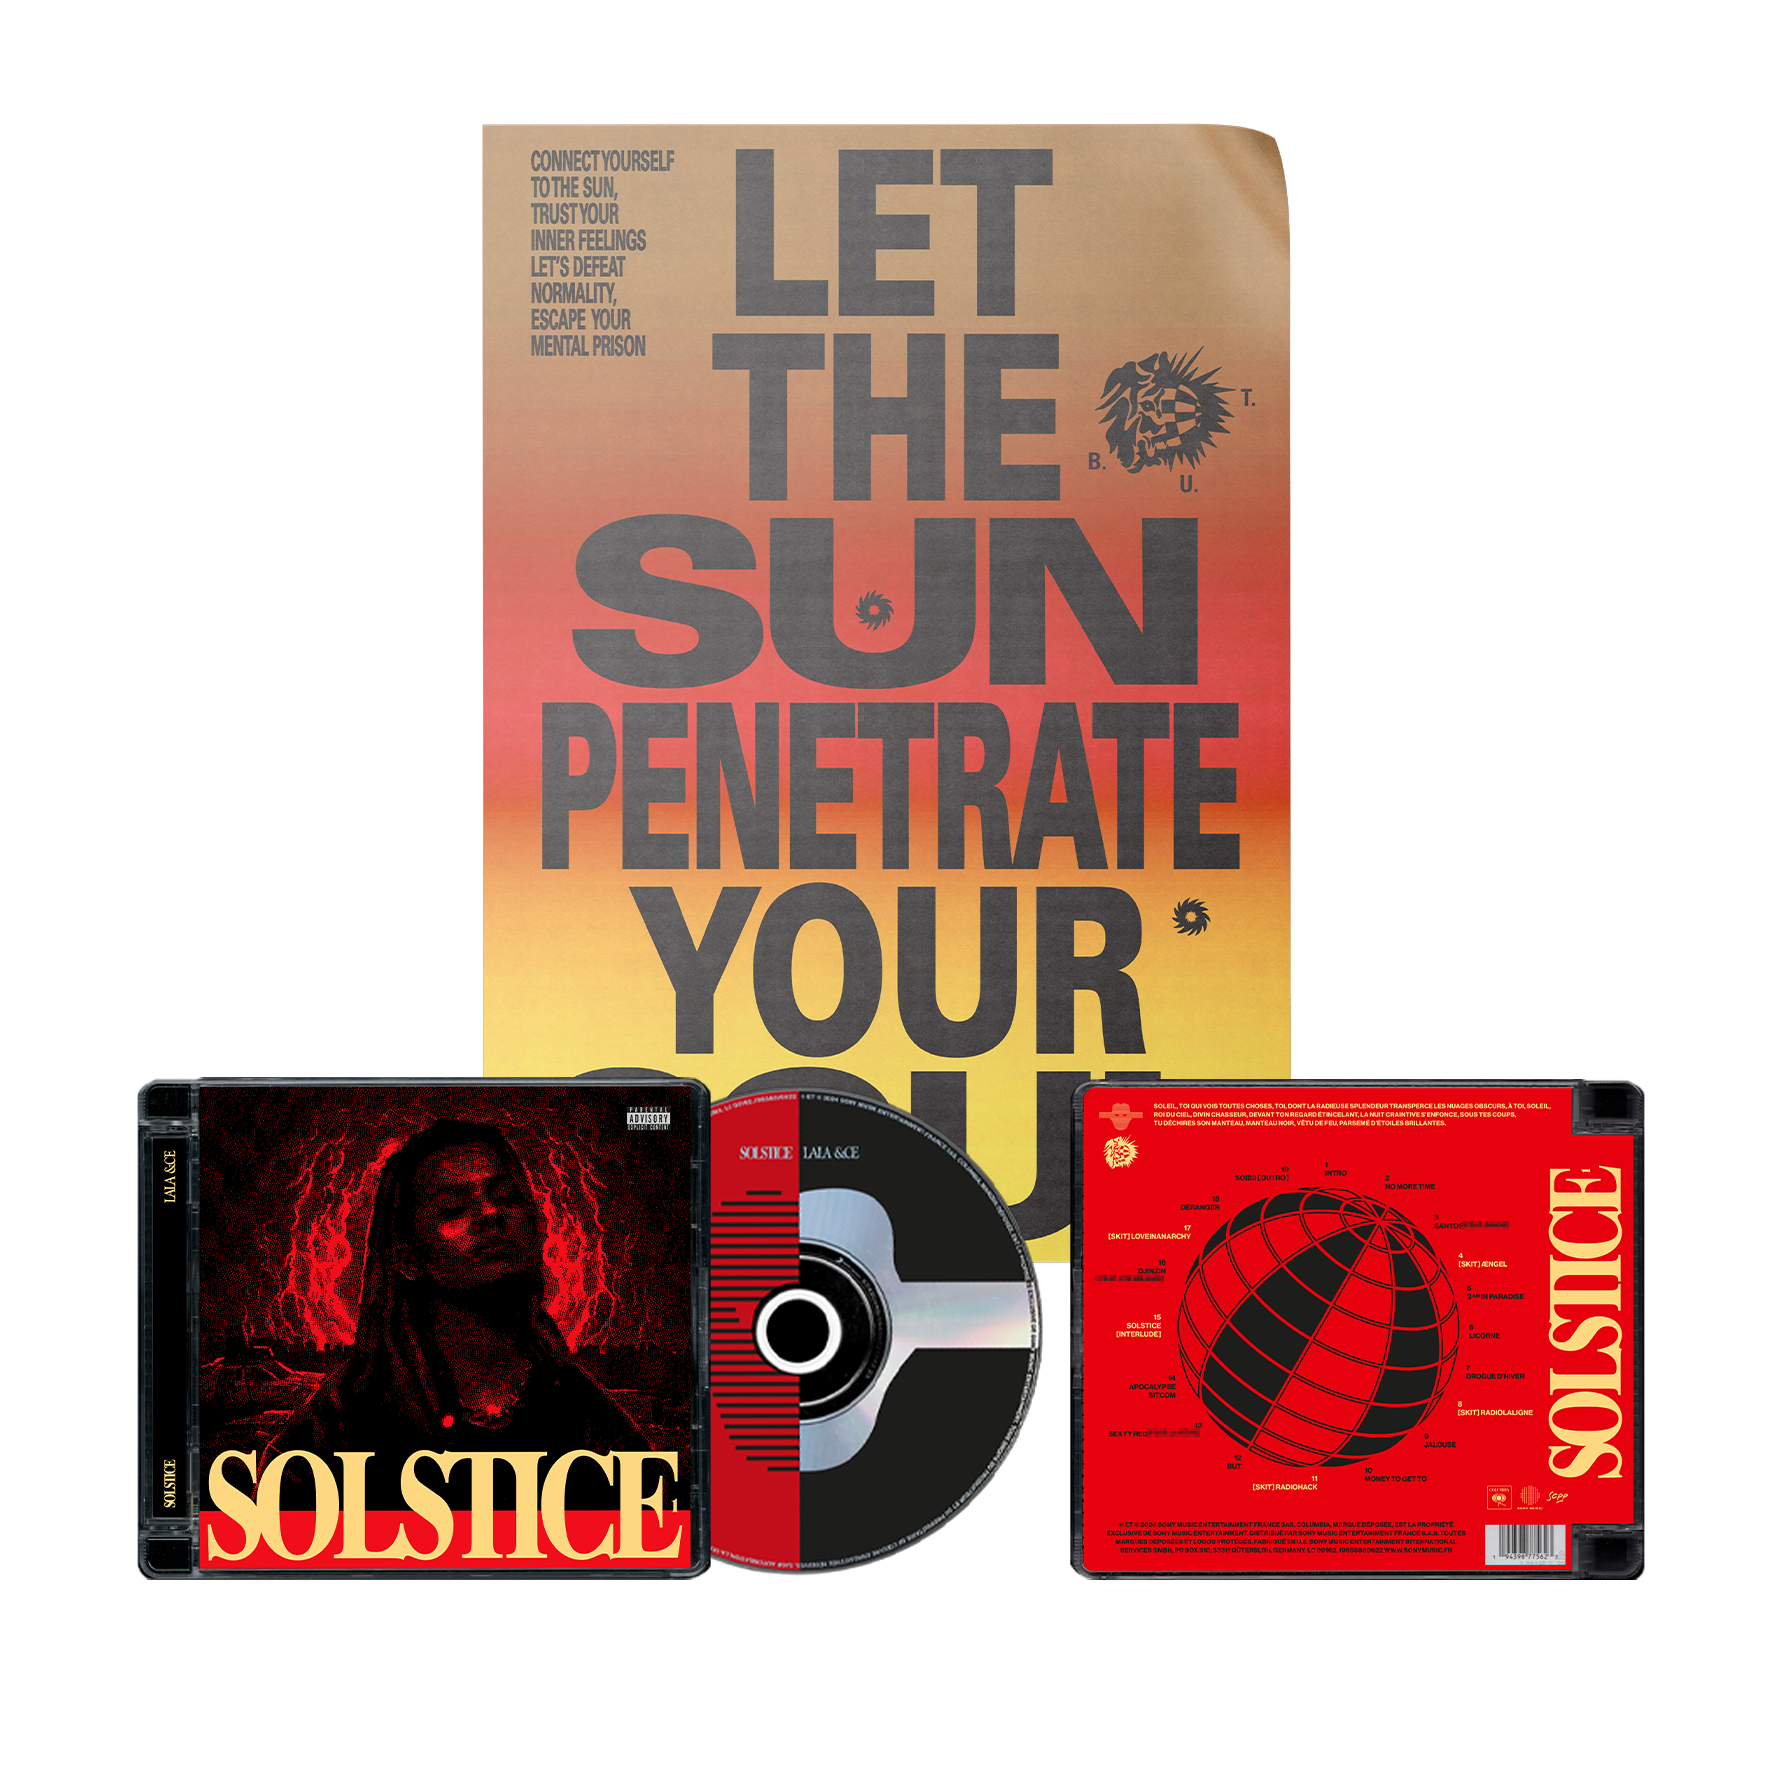 CD "SOLSTICE" + POSTER AU CHOIX